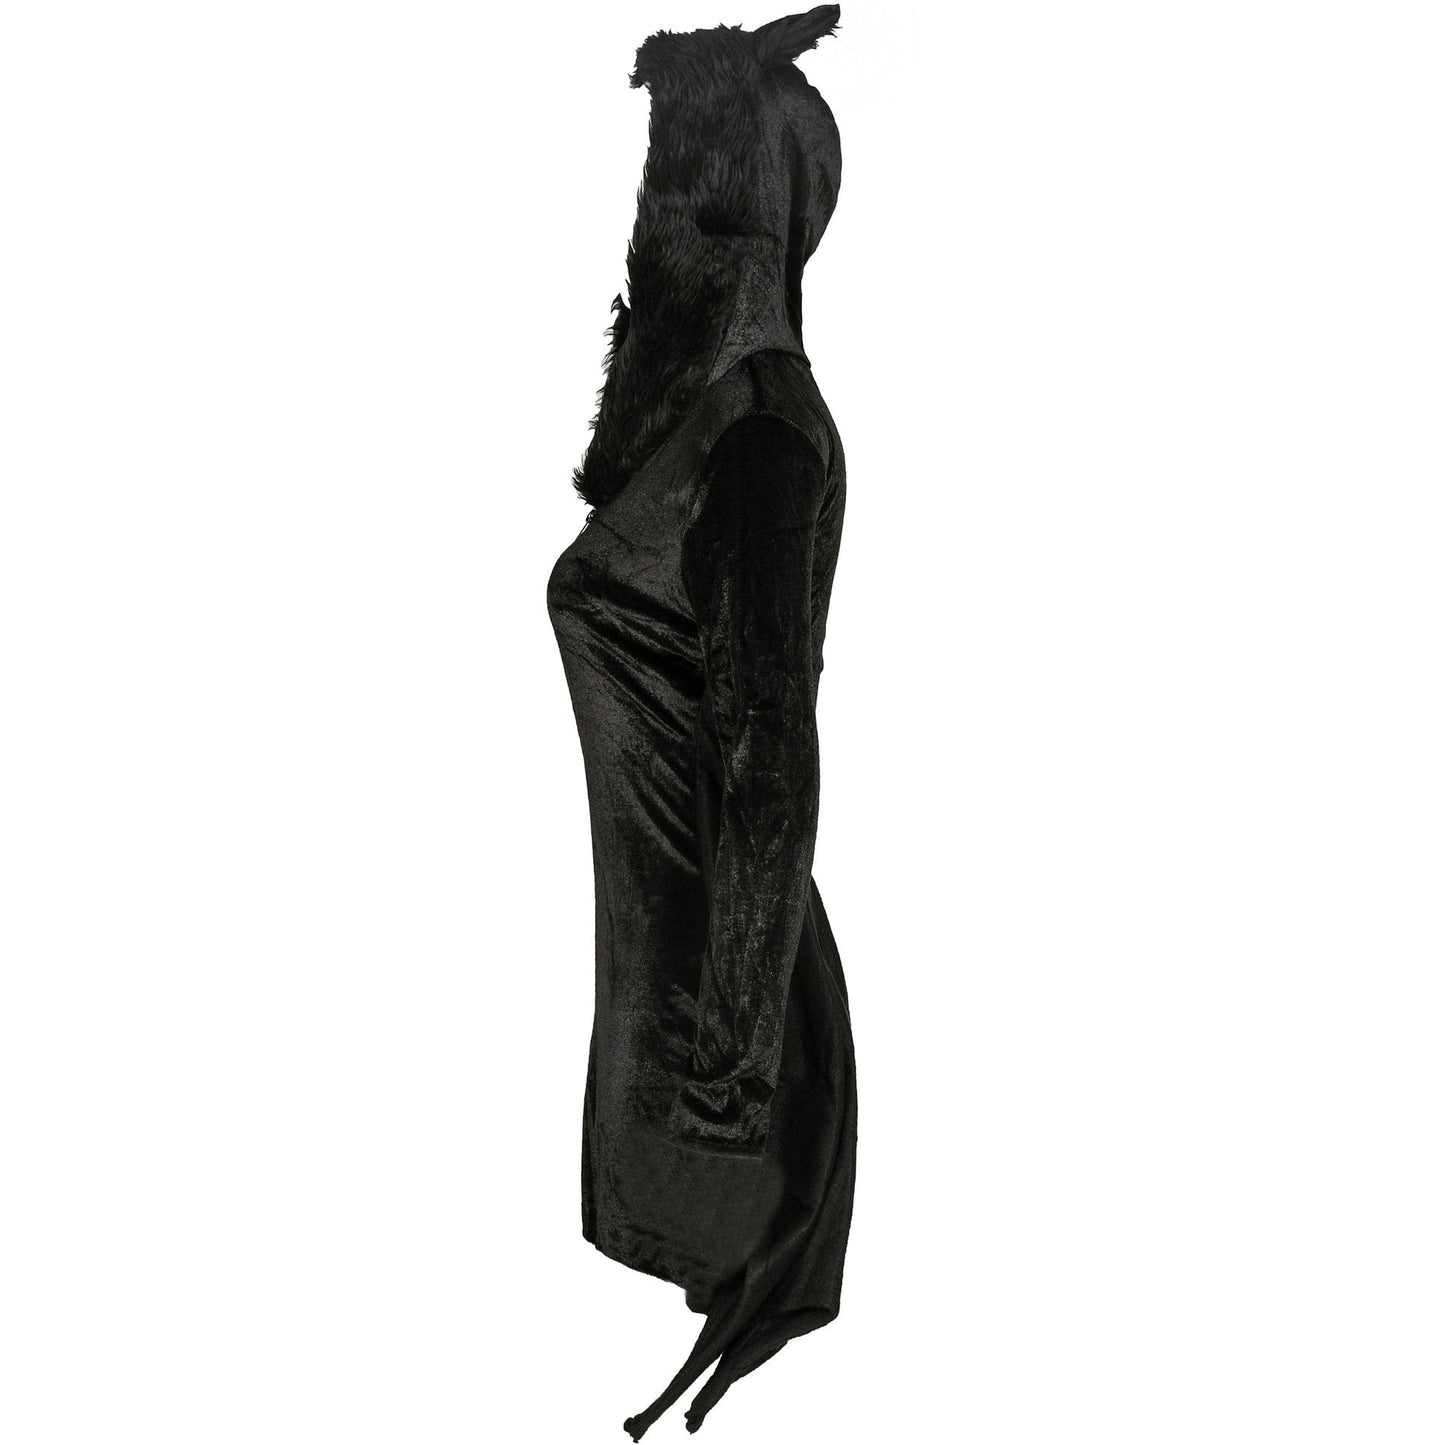 Plus Size Bat Costume Gothic Cozy Cosplay Halloween Costumes